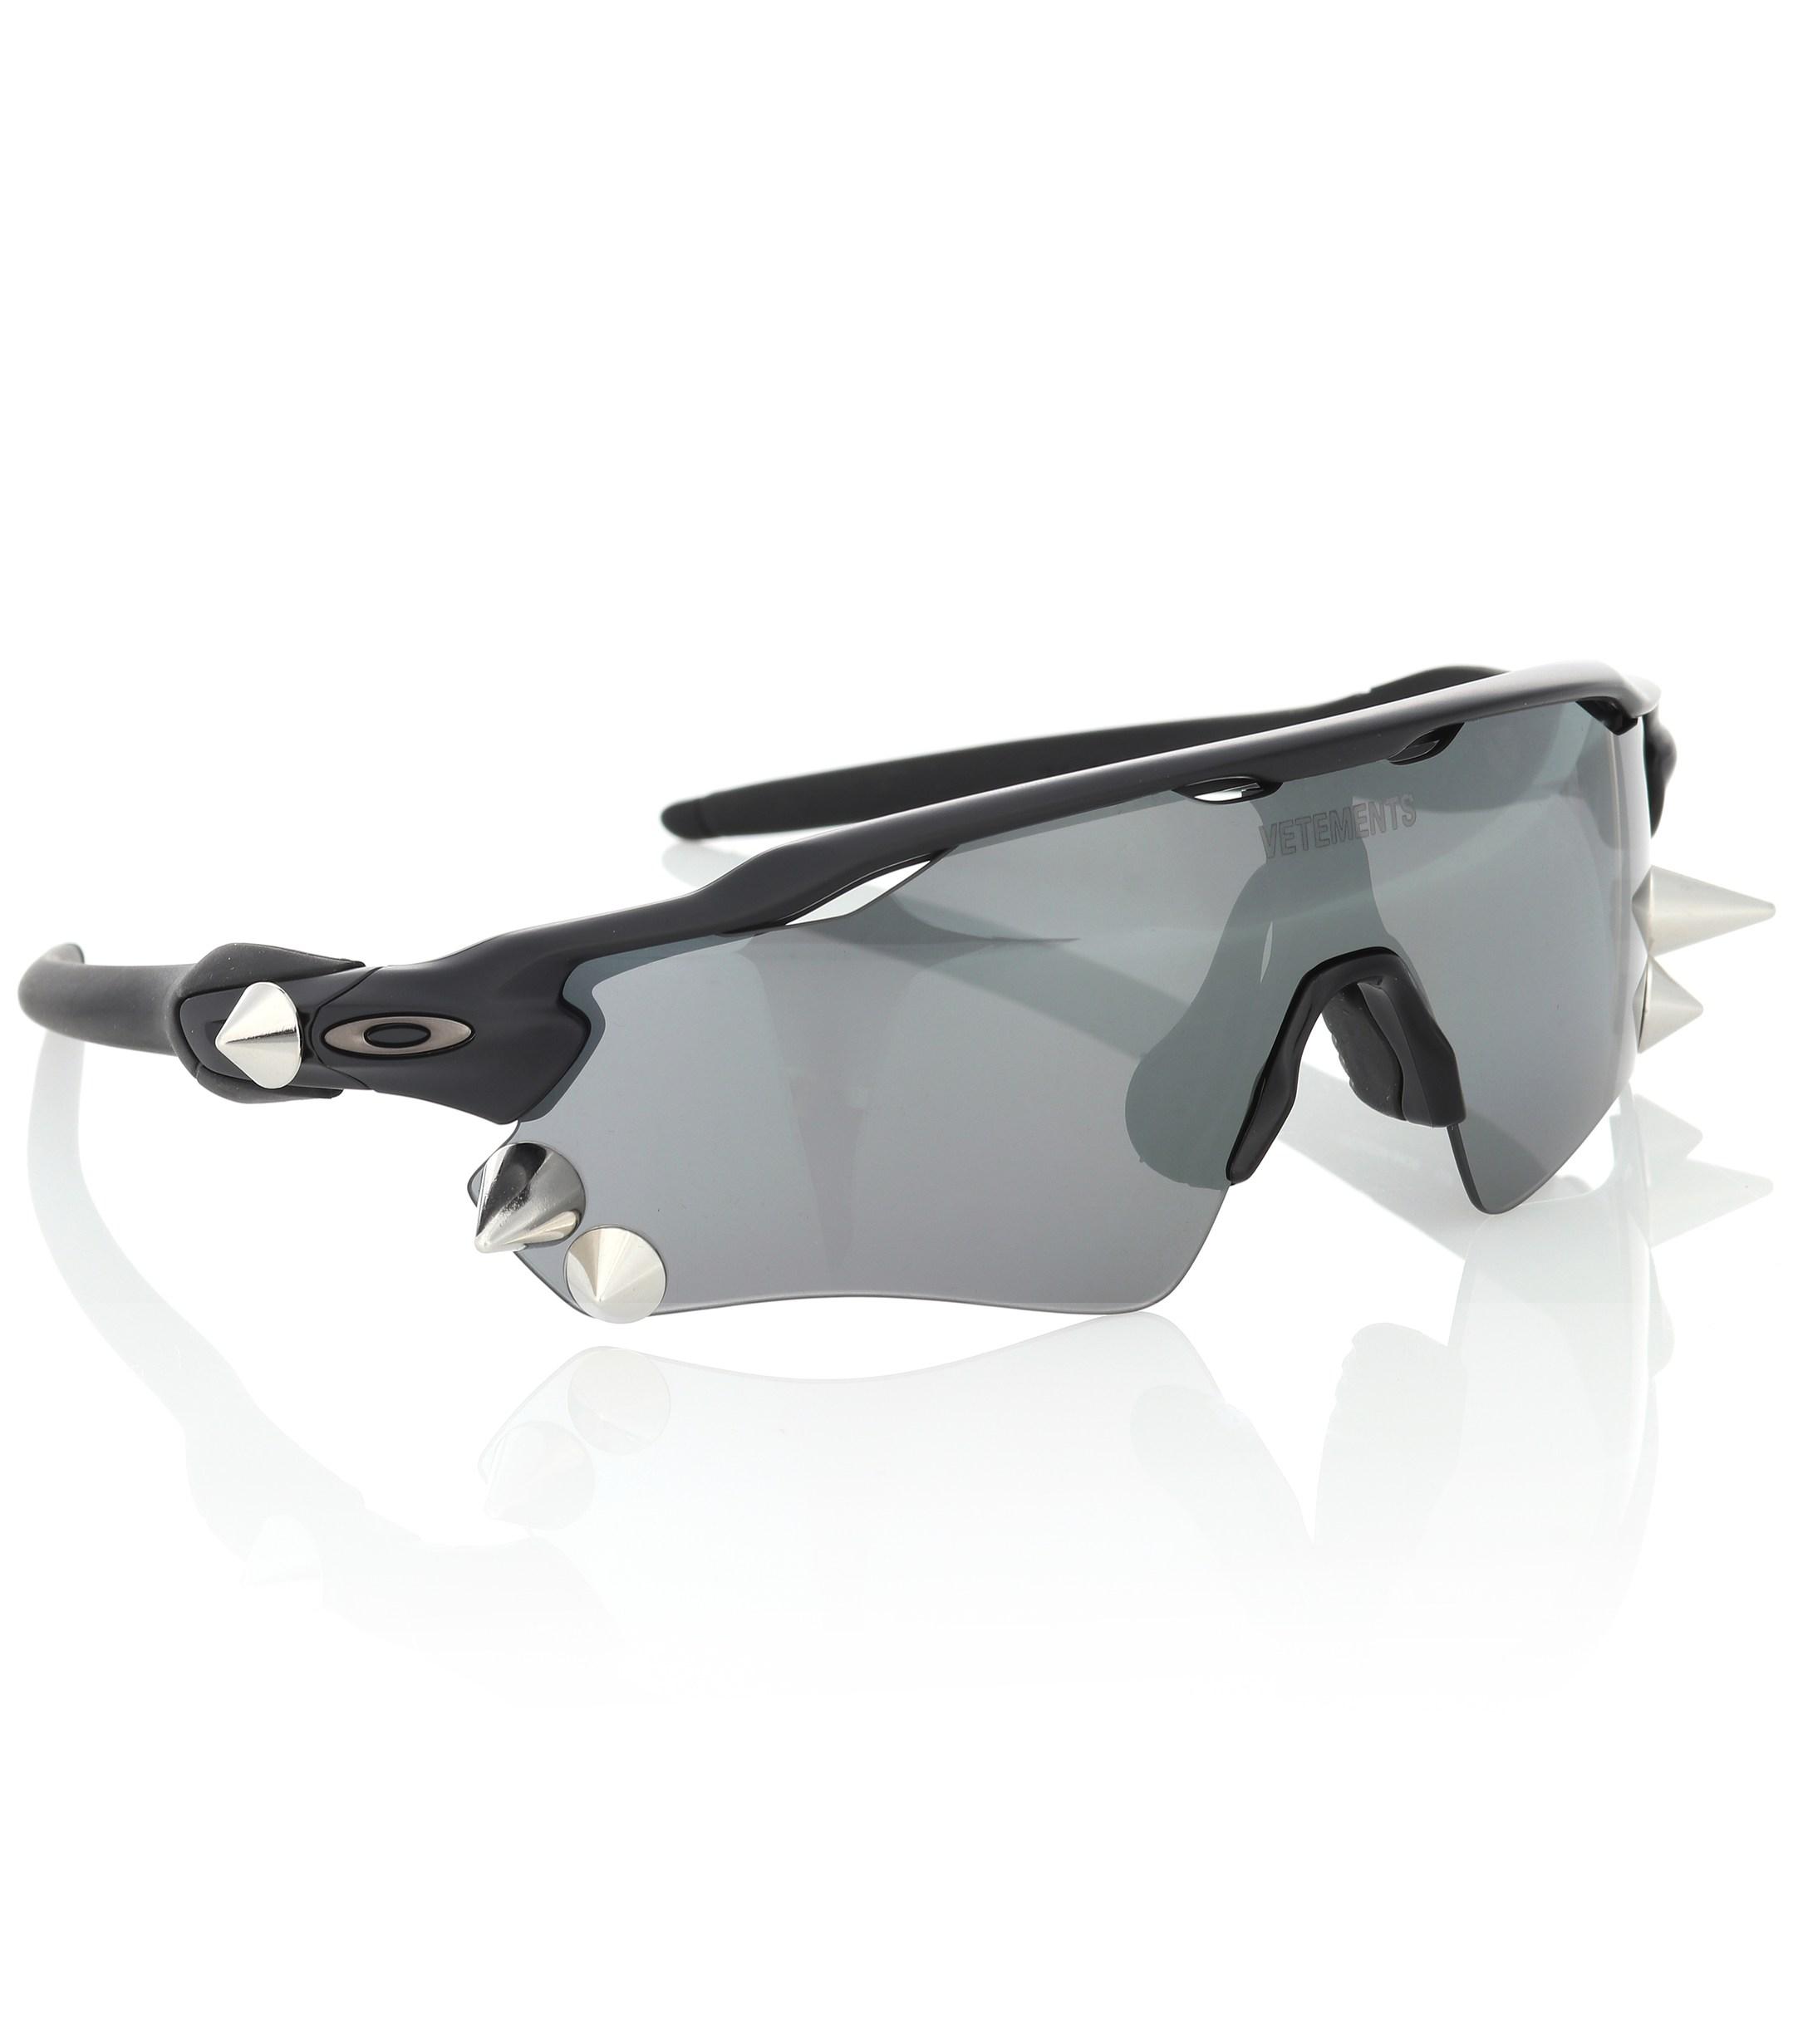 Vetements X Oakley Spiked Sunglasses in Black - Lyst